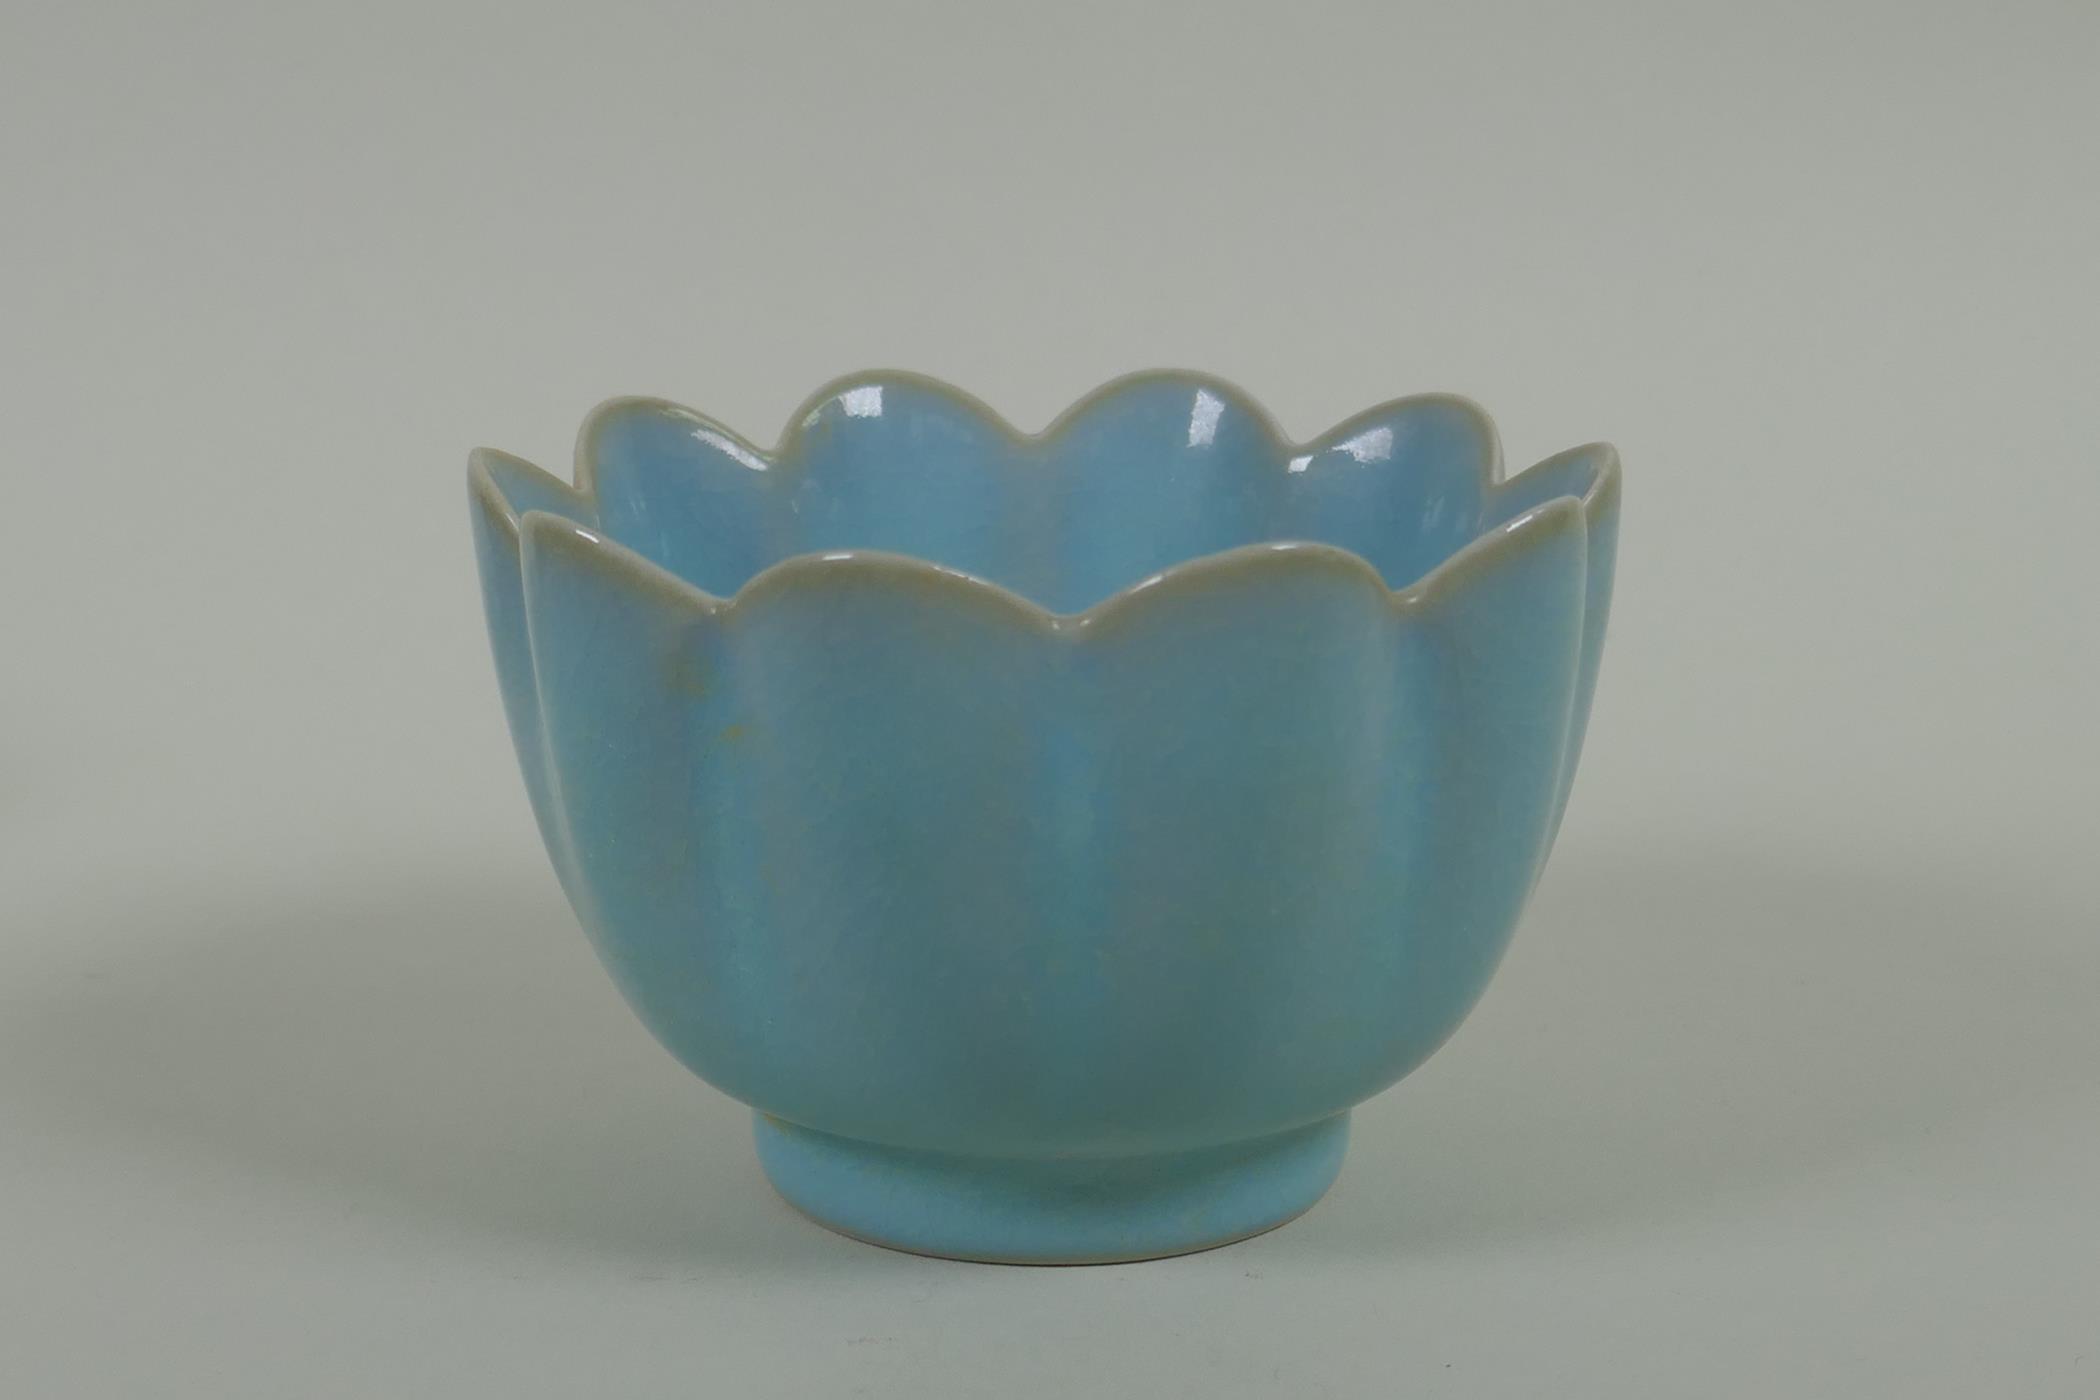 A Chinese Ru ware style lotus flower shaped bowl, 11cm diameter